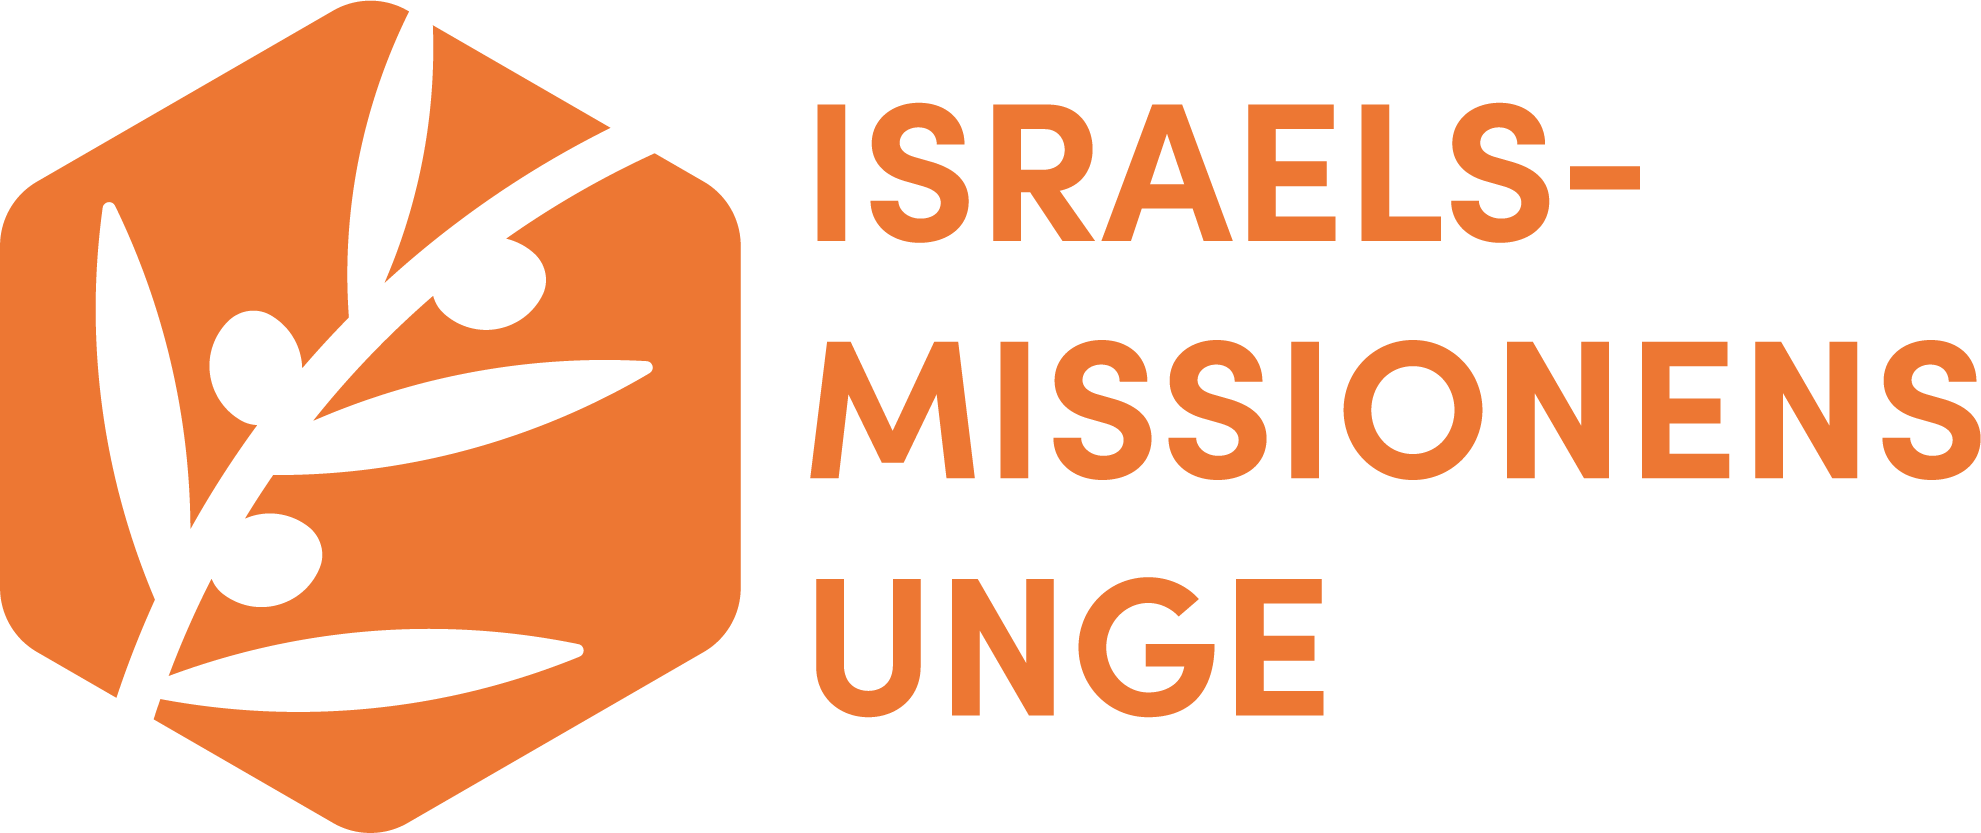 Isreals missionens unge logo 